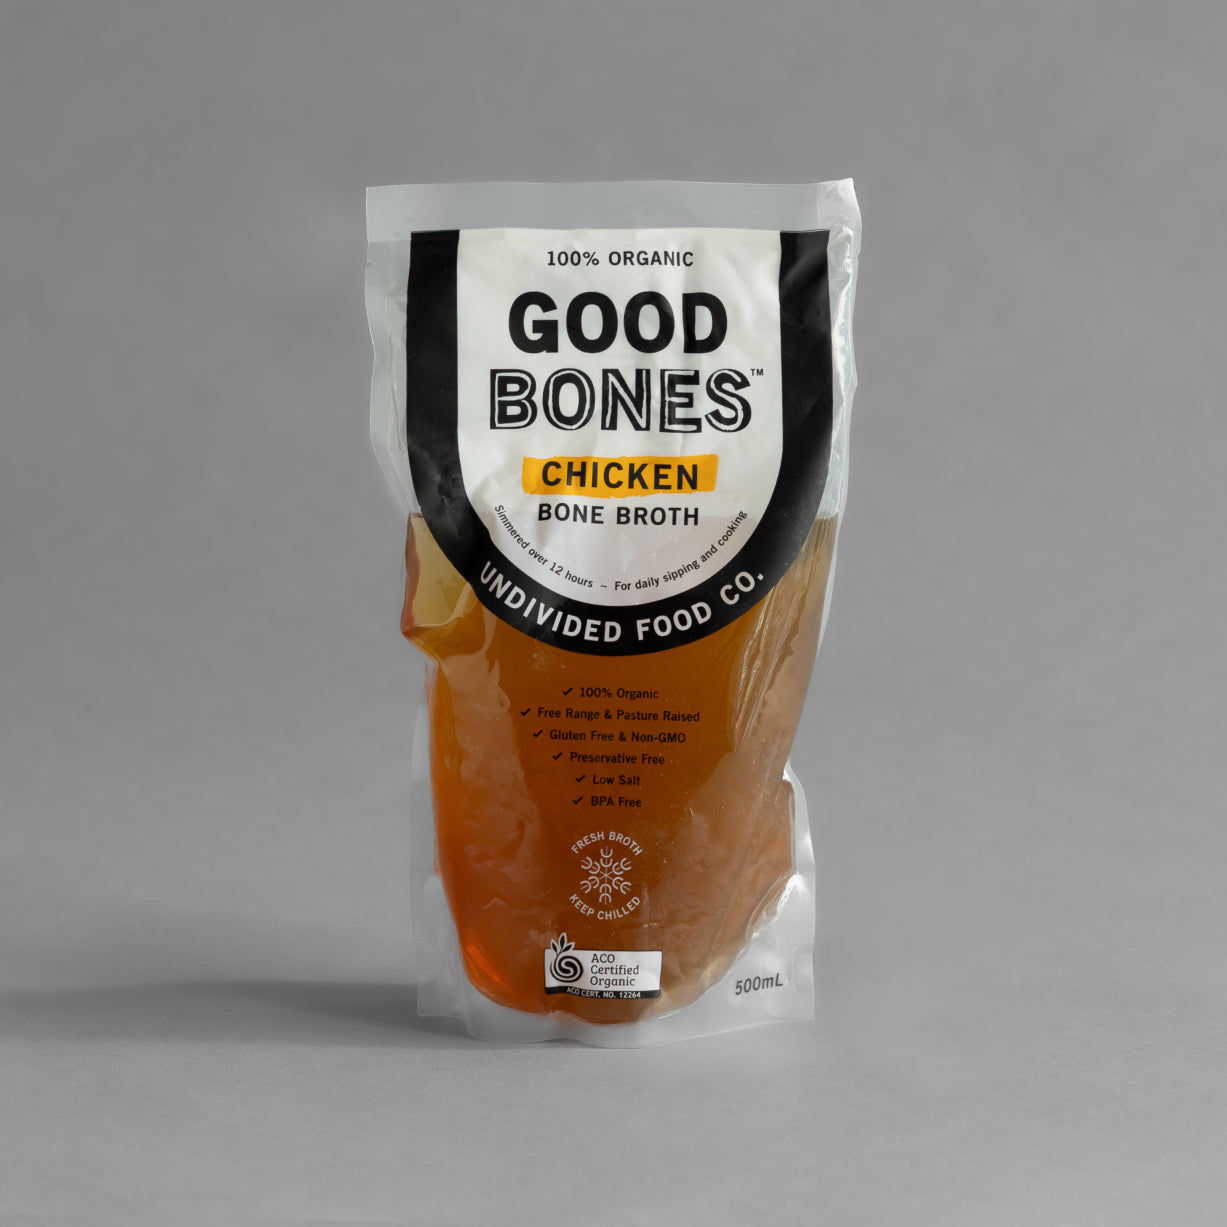 Undivided Food Co. 100% organic Good Bones Chicken broth